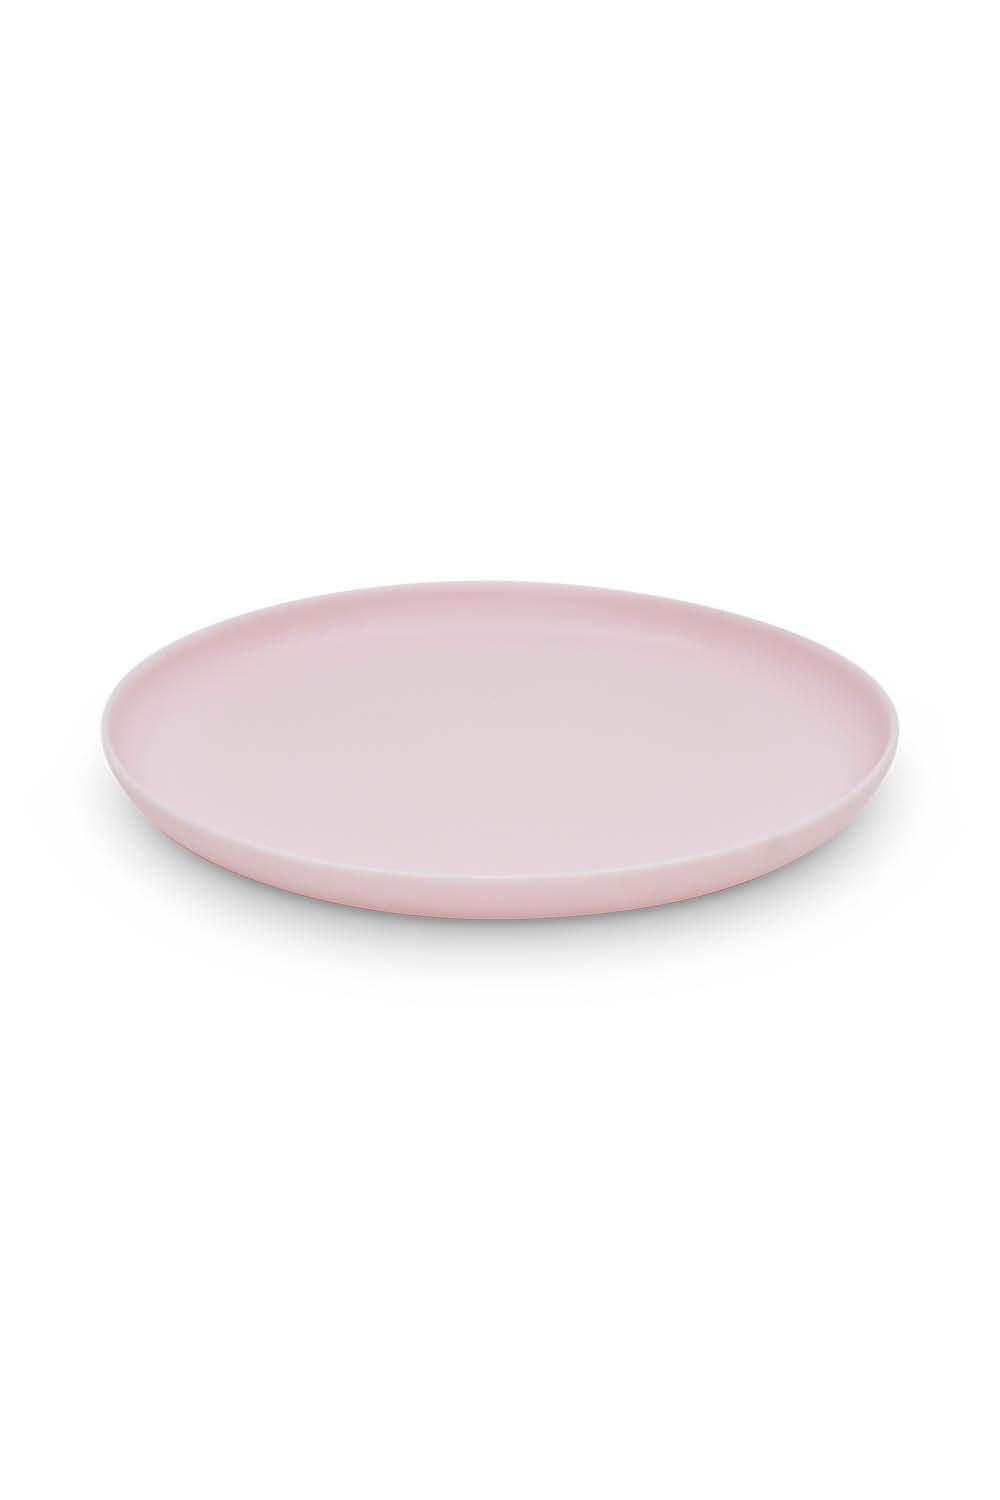 MODERN Large Platter in Pale Rose